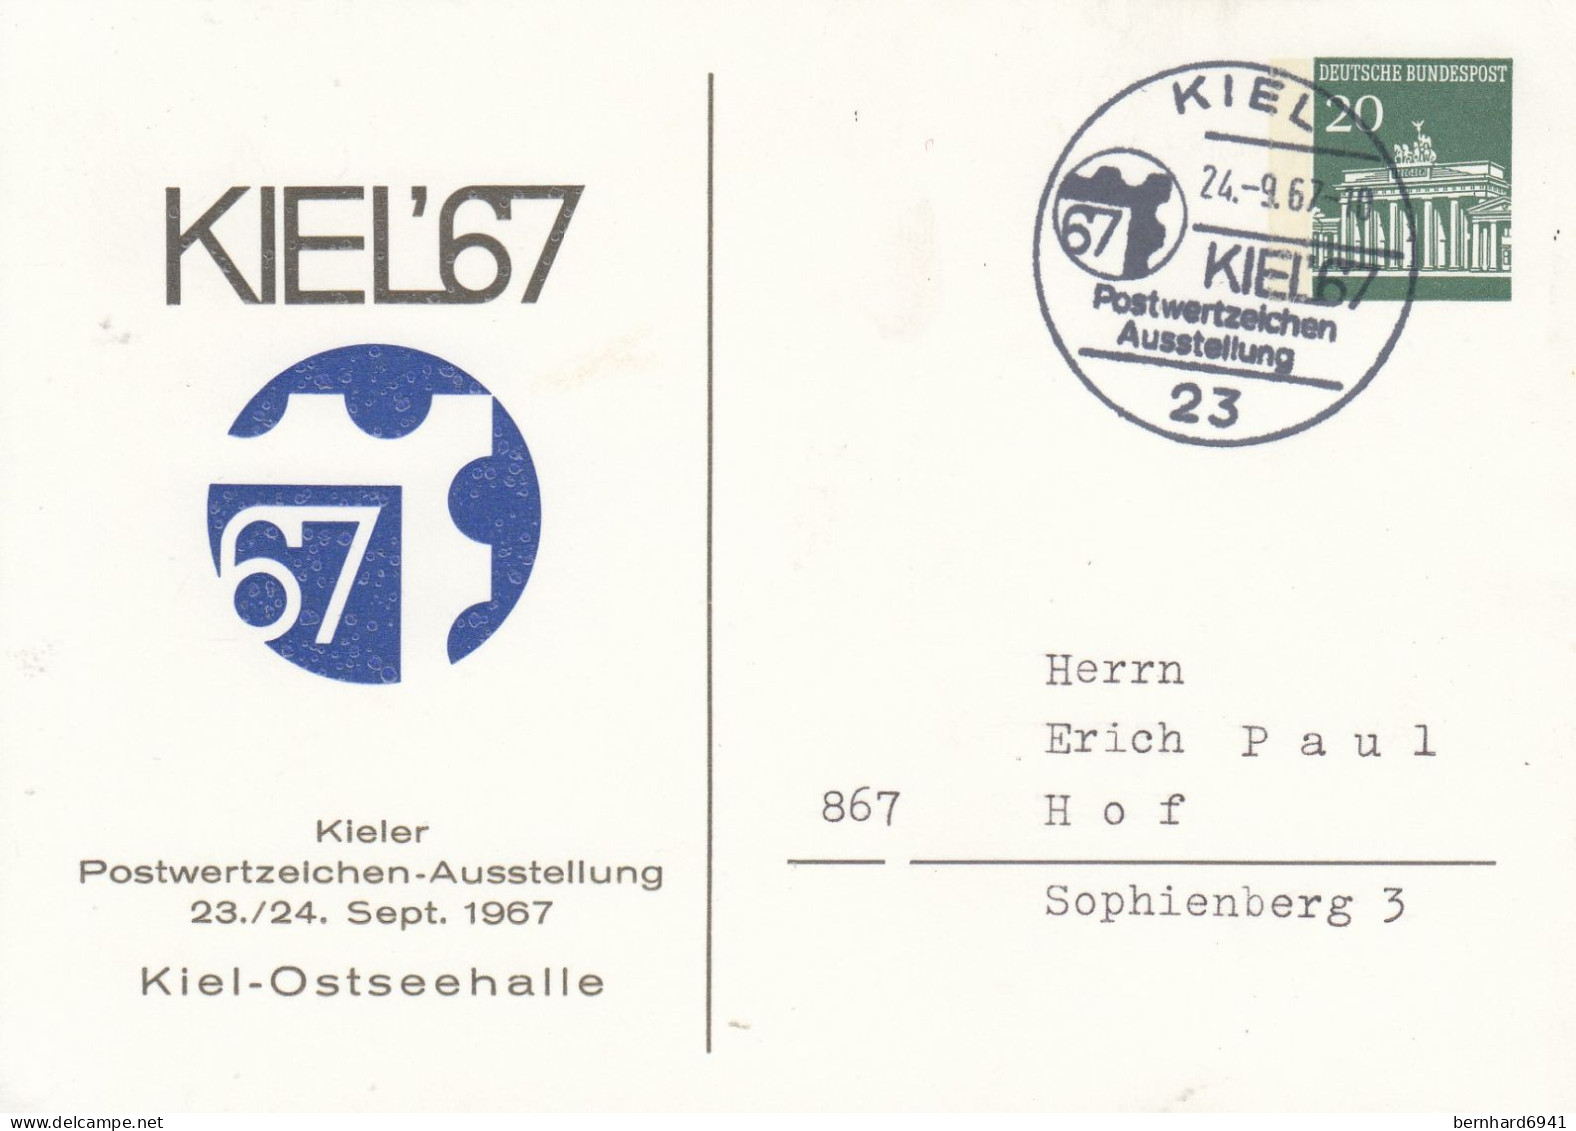 PP 43/6  Kiel`67 - Kieler Postwertzeichen-Ausstellung 23./24. Sept. 1967 - Kiel-Ostseehalle, Kiel - Private Postcards - Mint